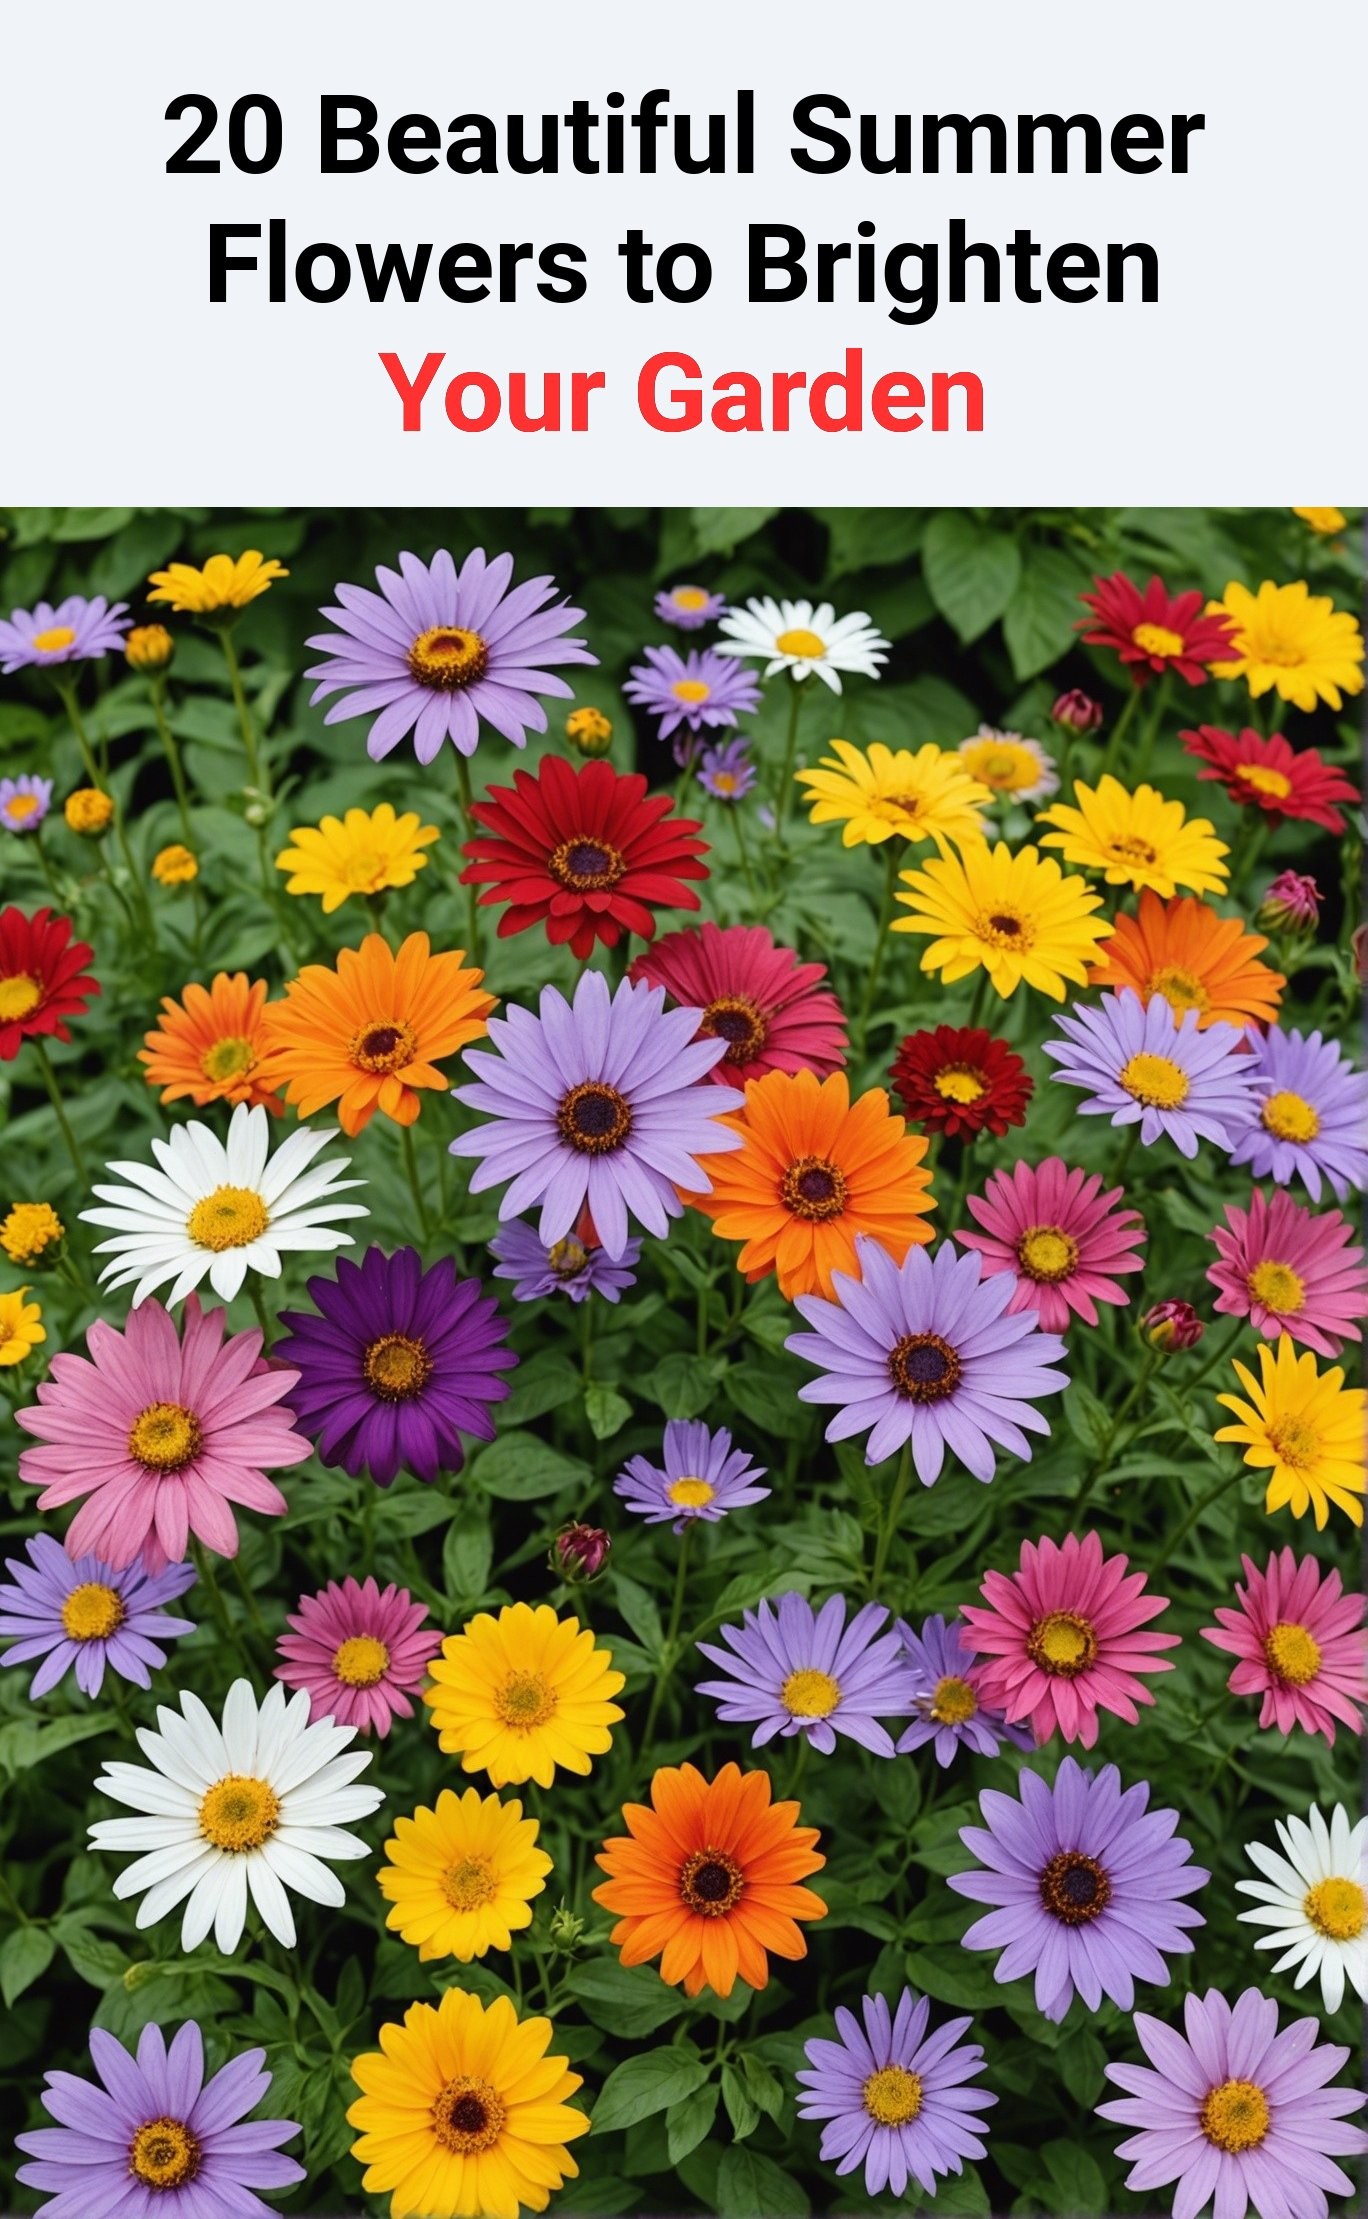 20 Beautiful Summer Flowers to Brighten Your Garden